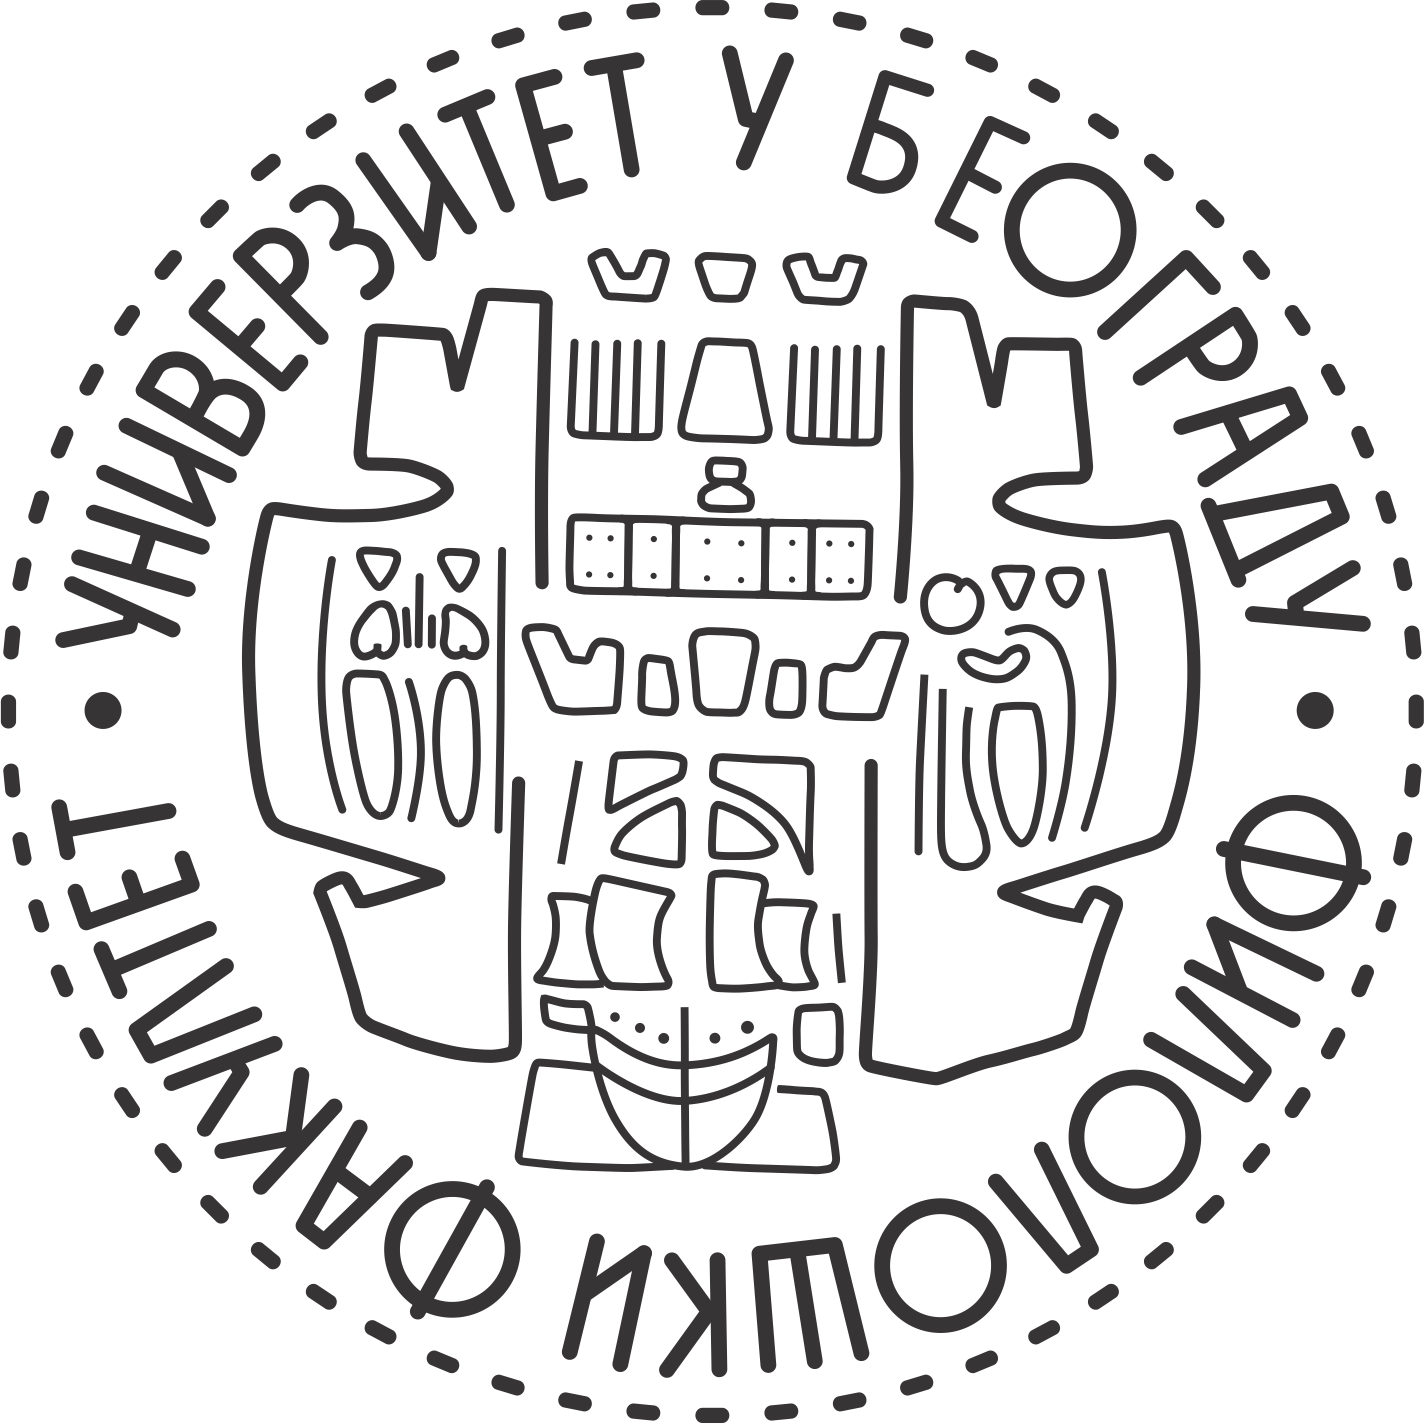 Univerzitet u Beogradu, Filološki fakultet logo